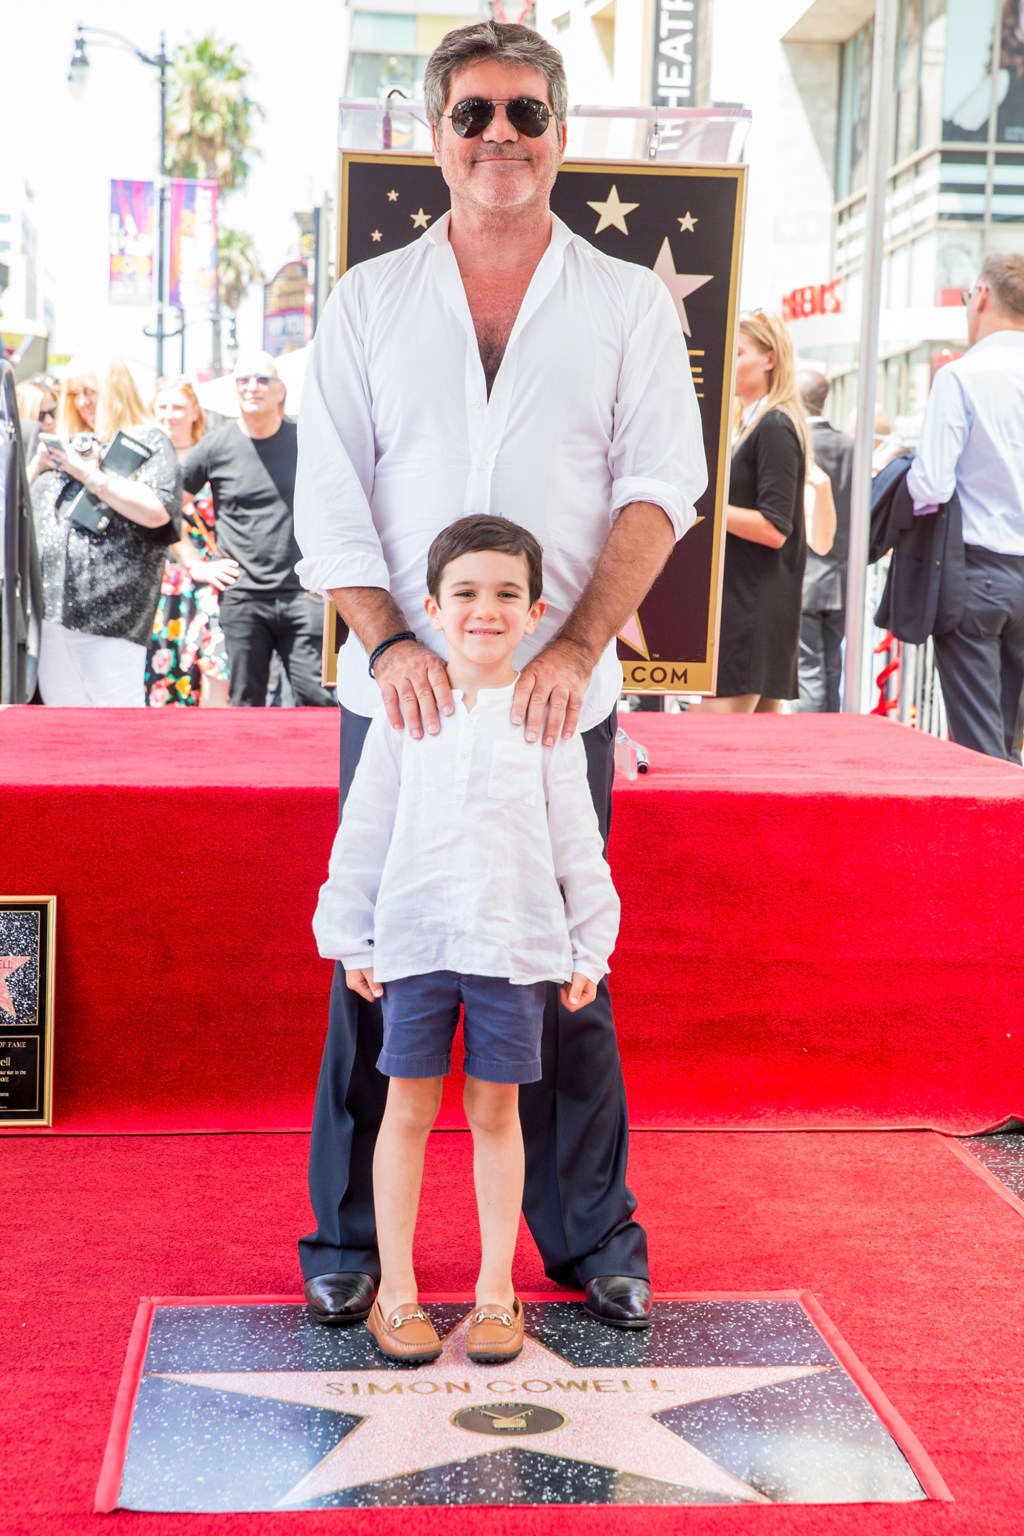 Simon Cowell with son, Eric